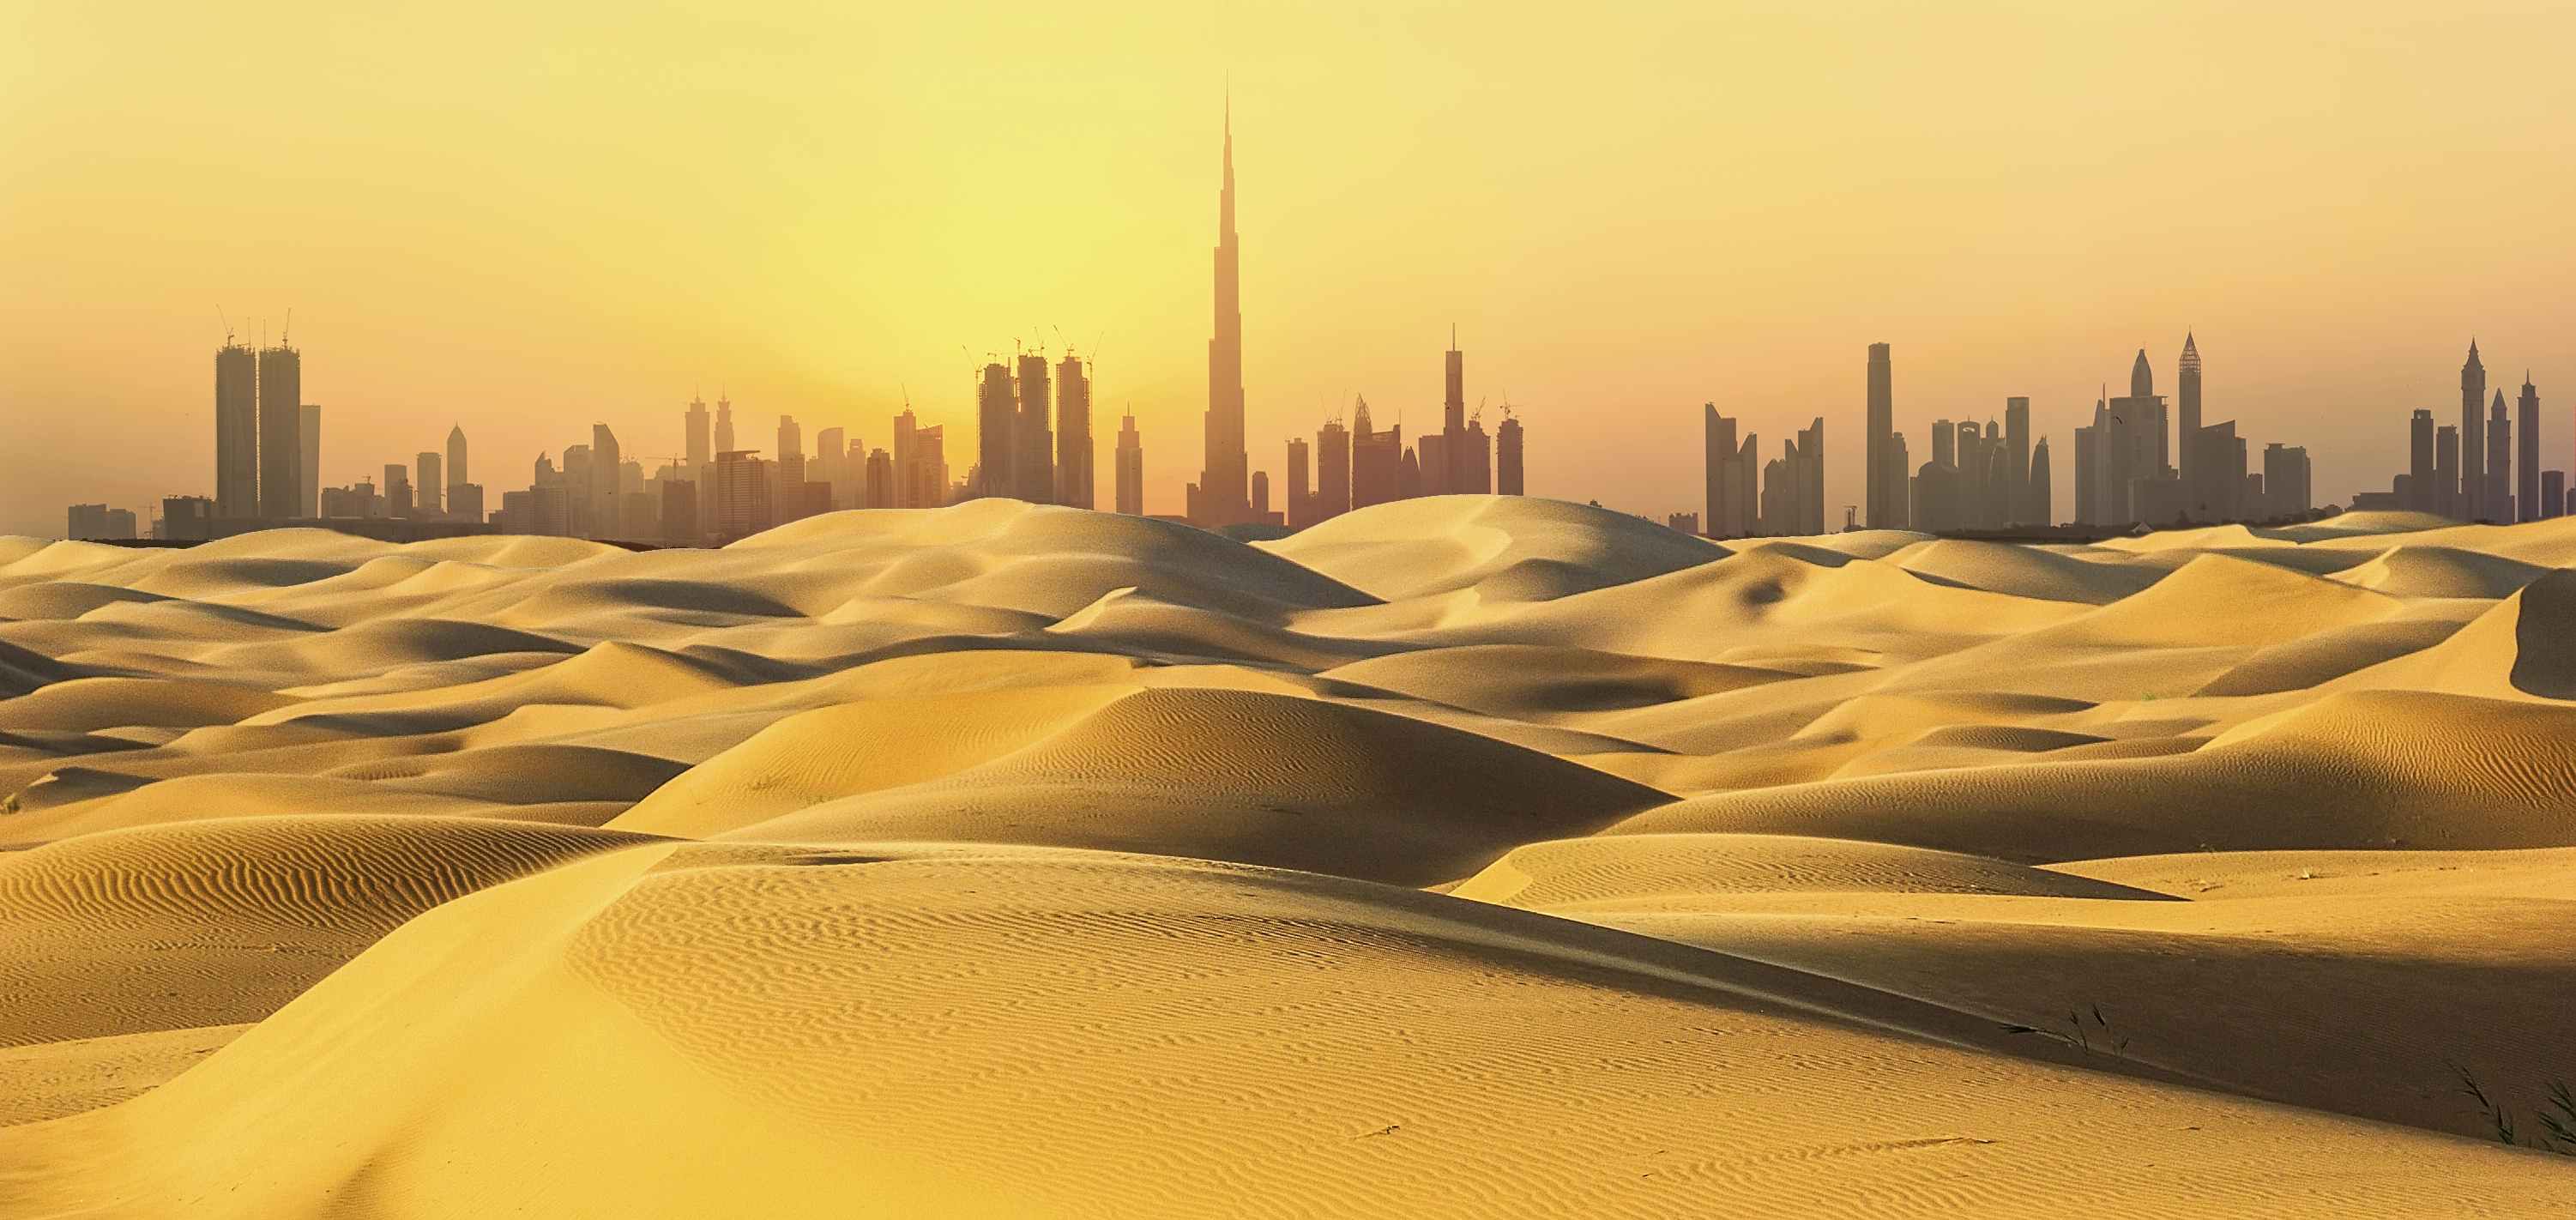 Dubai from the sand dunes